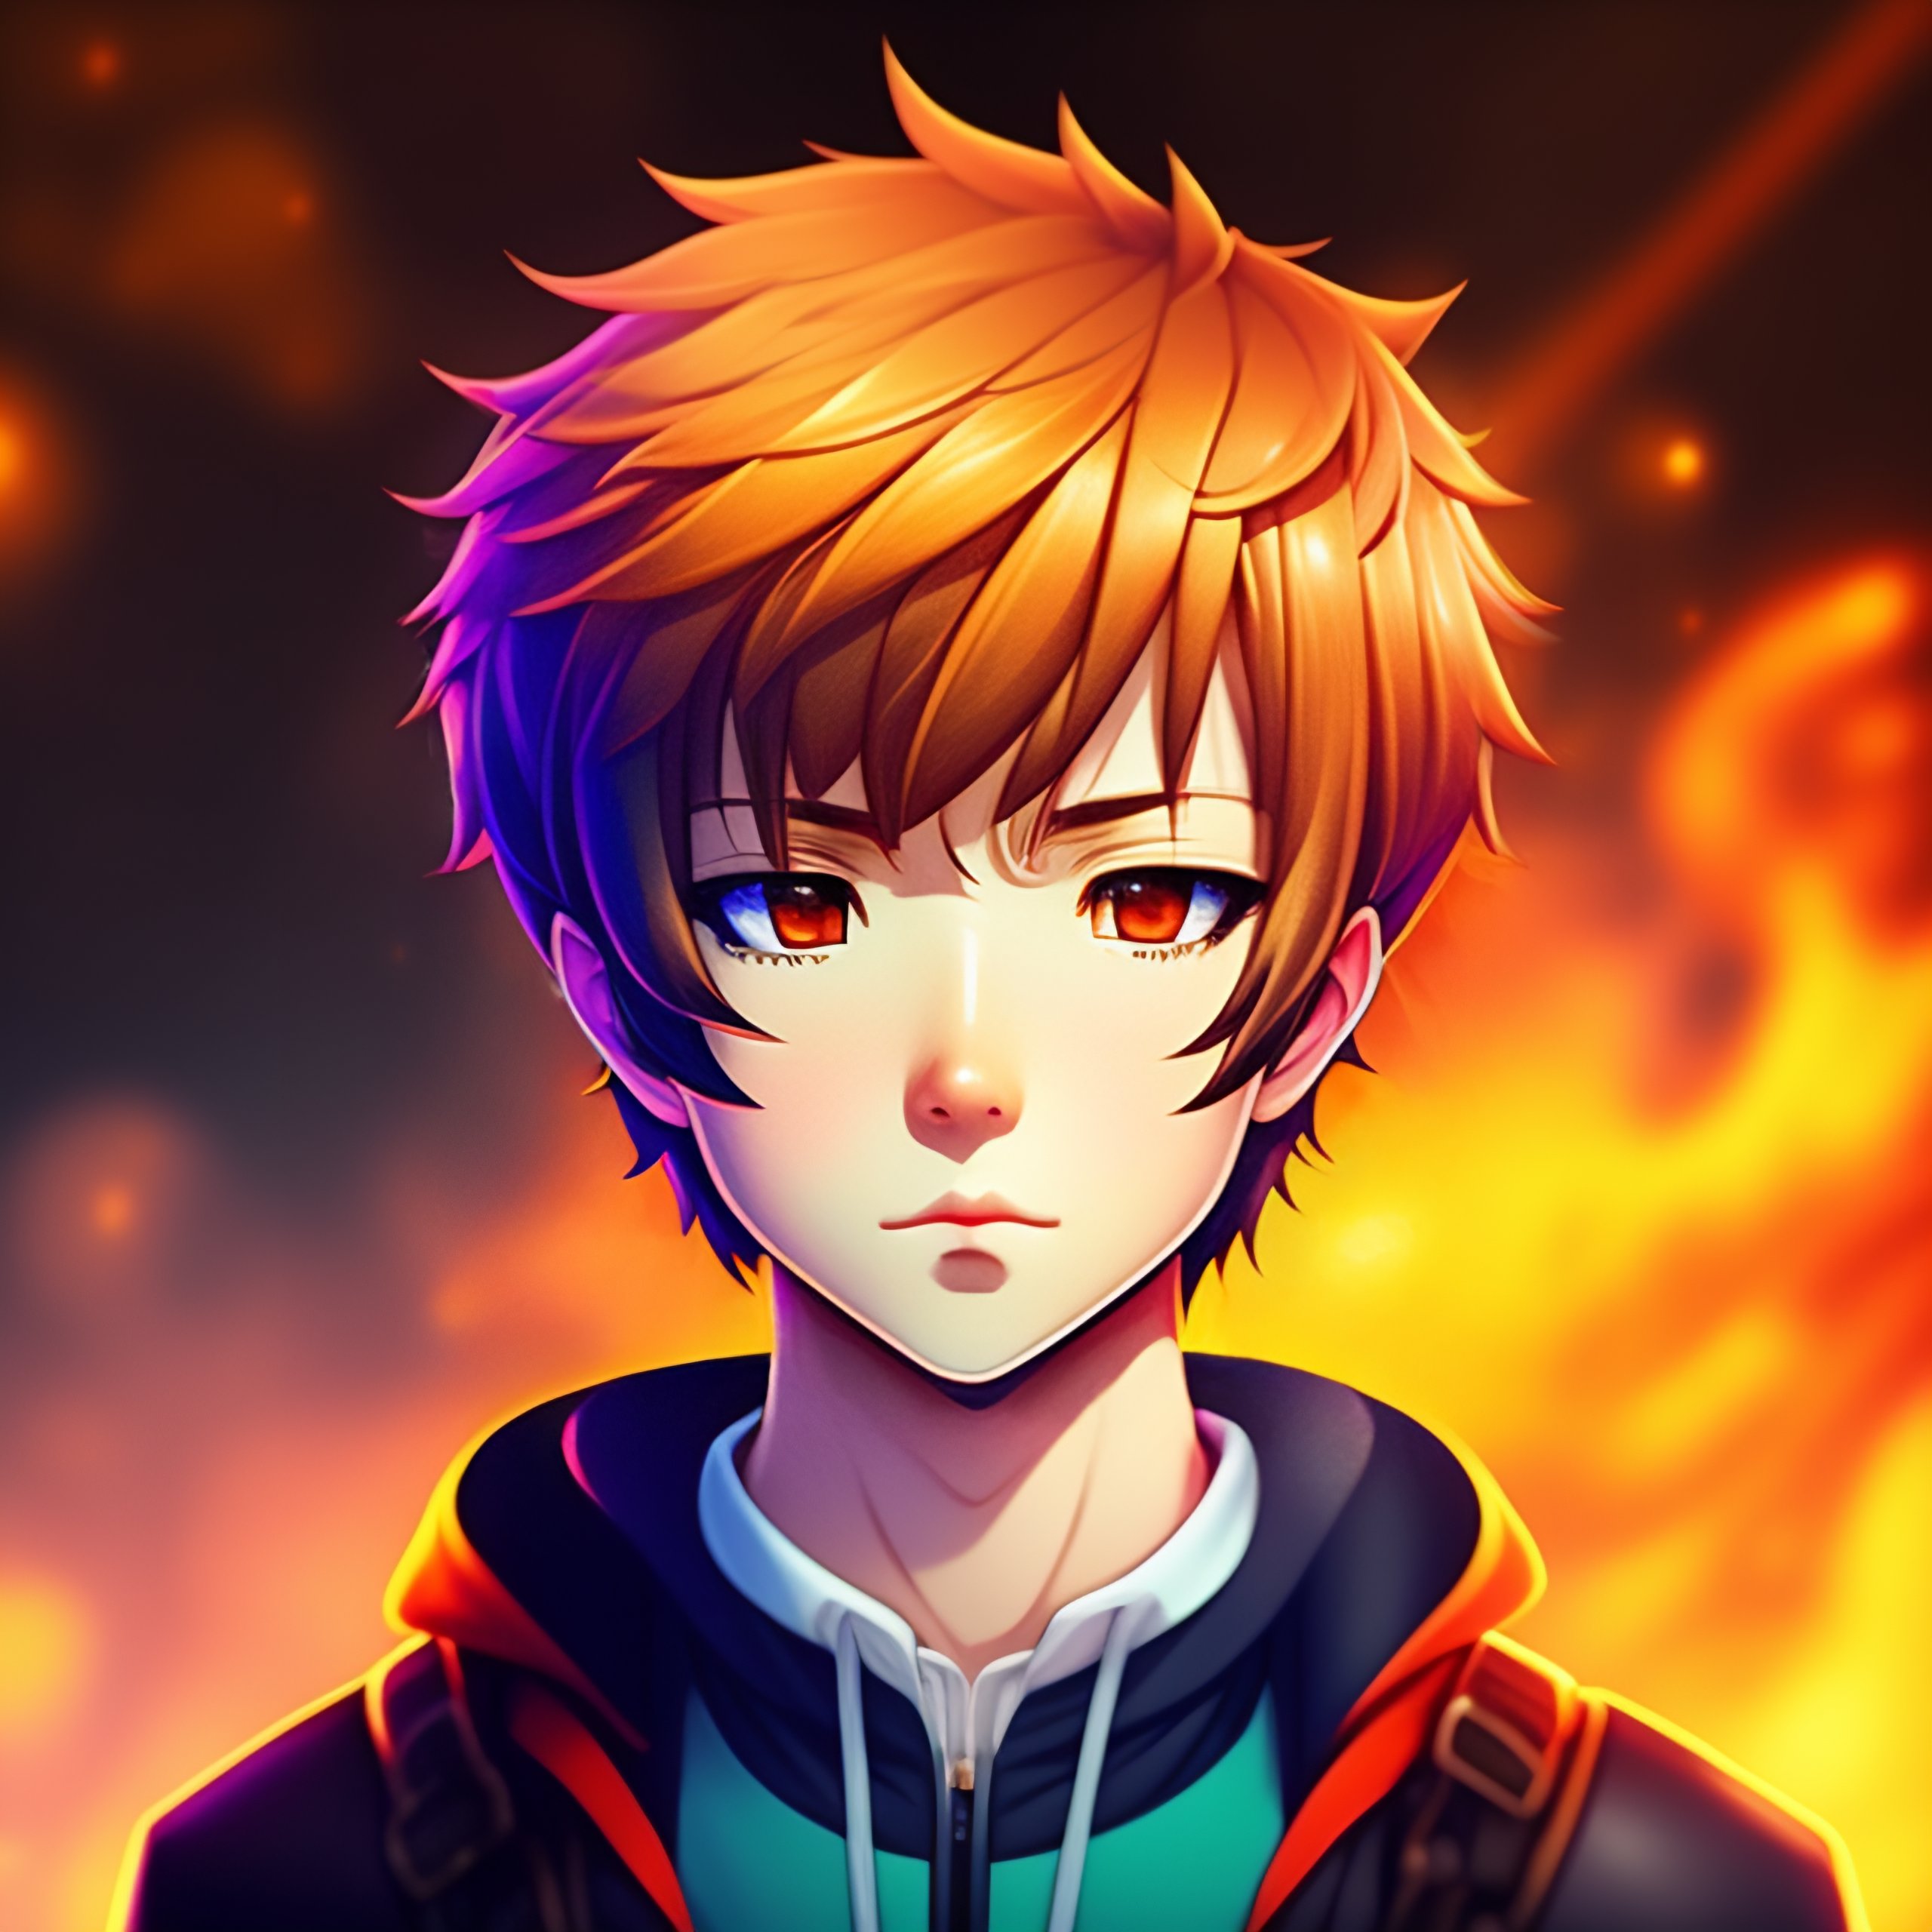 Lexica - Boy anime web3 profile picture